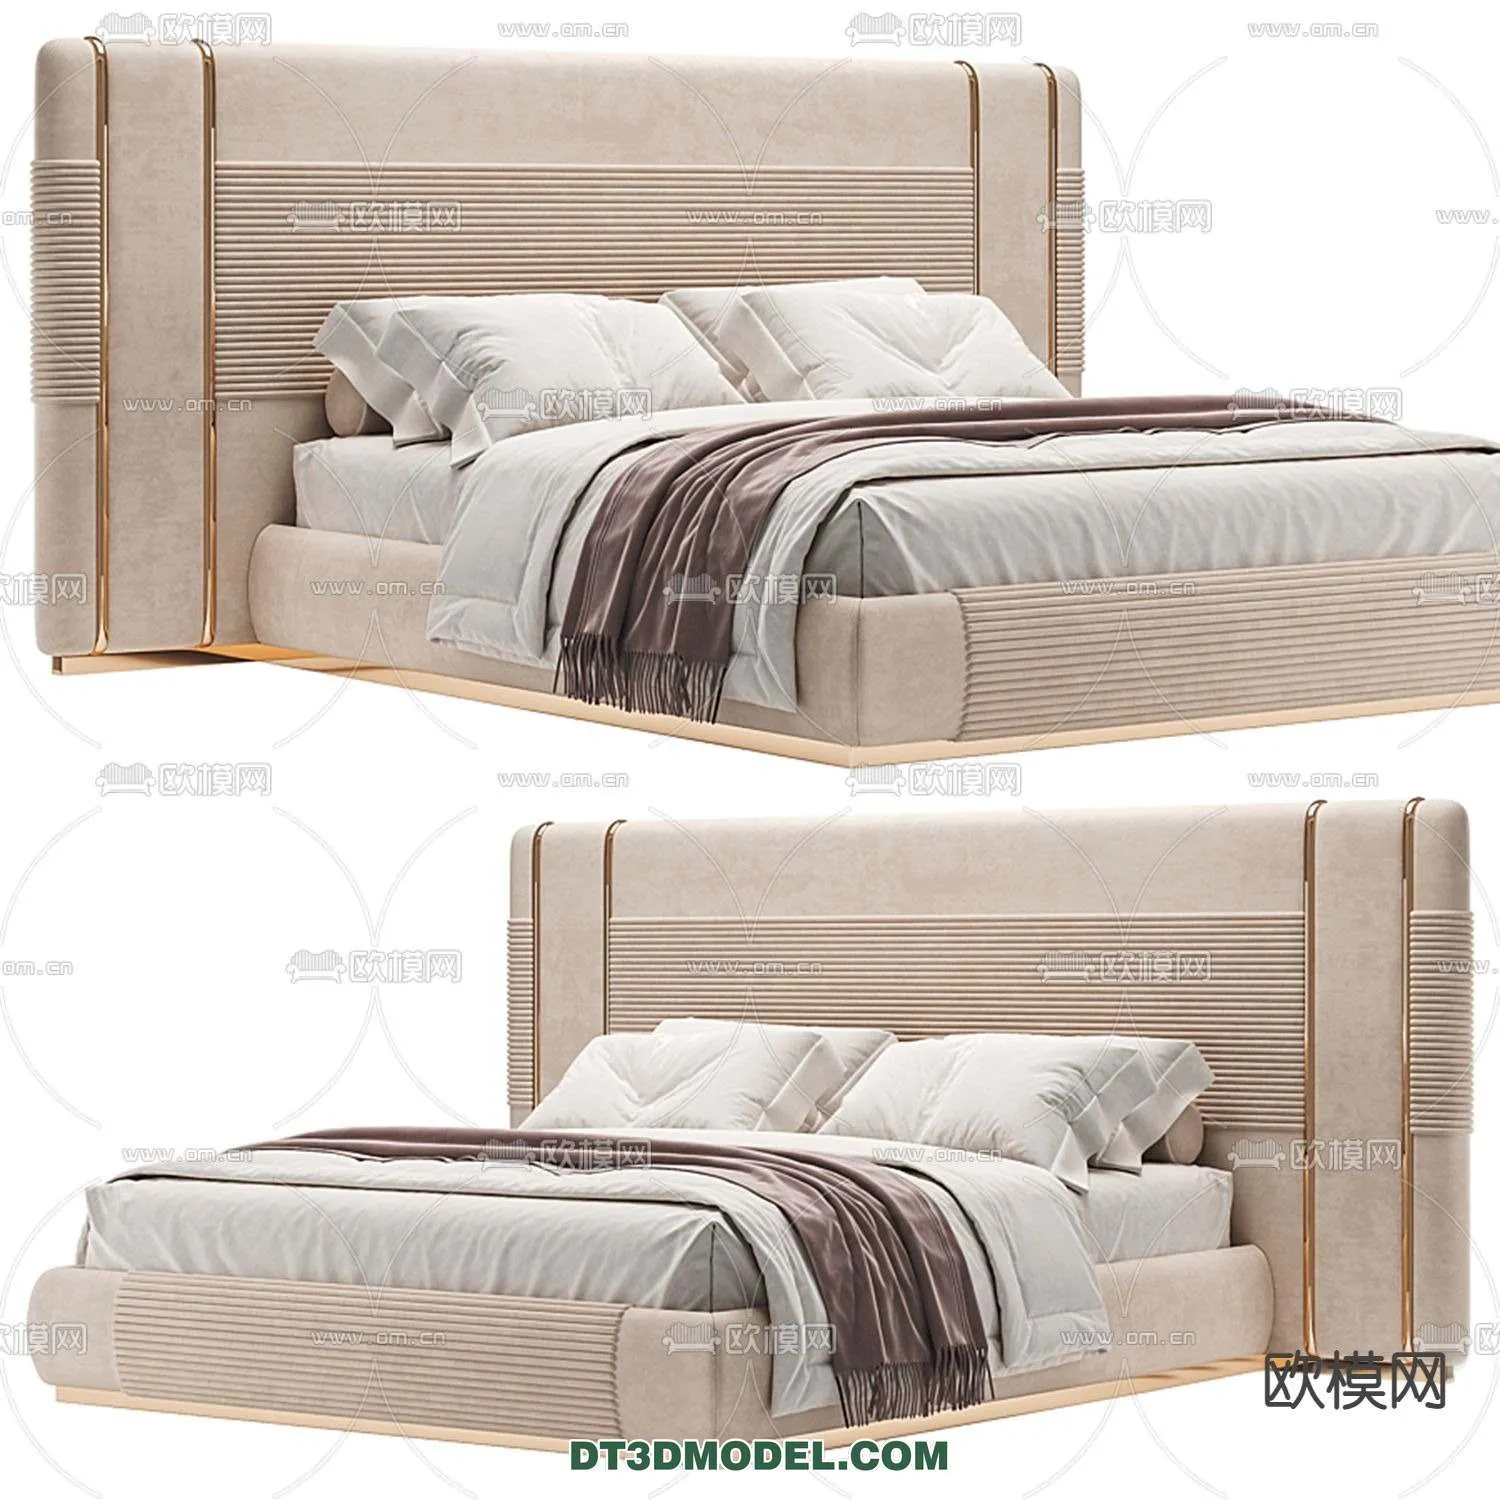 Double Bed 3D Models – 0068